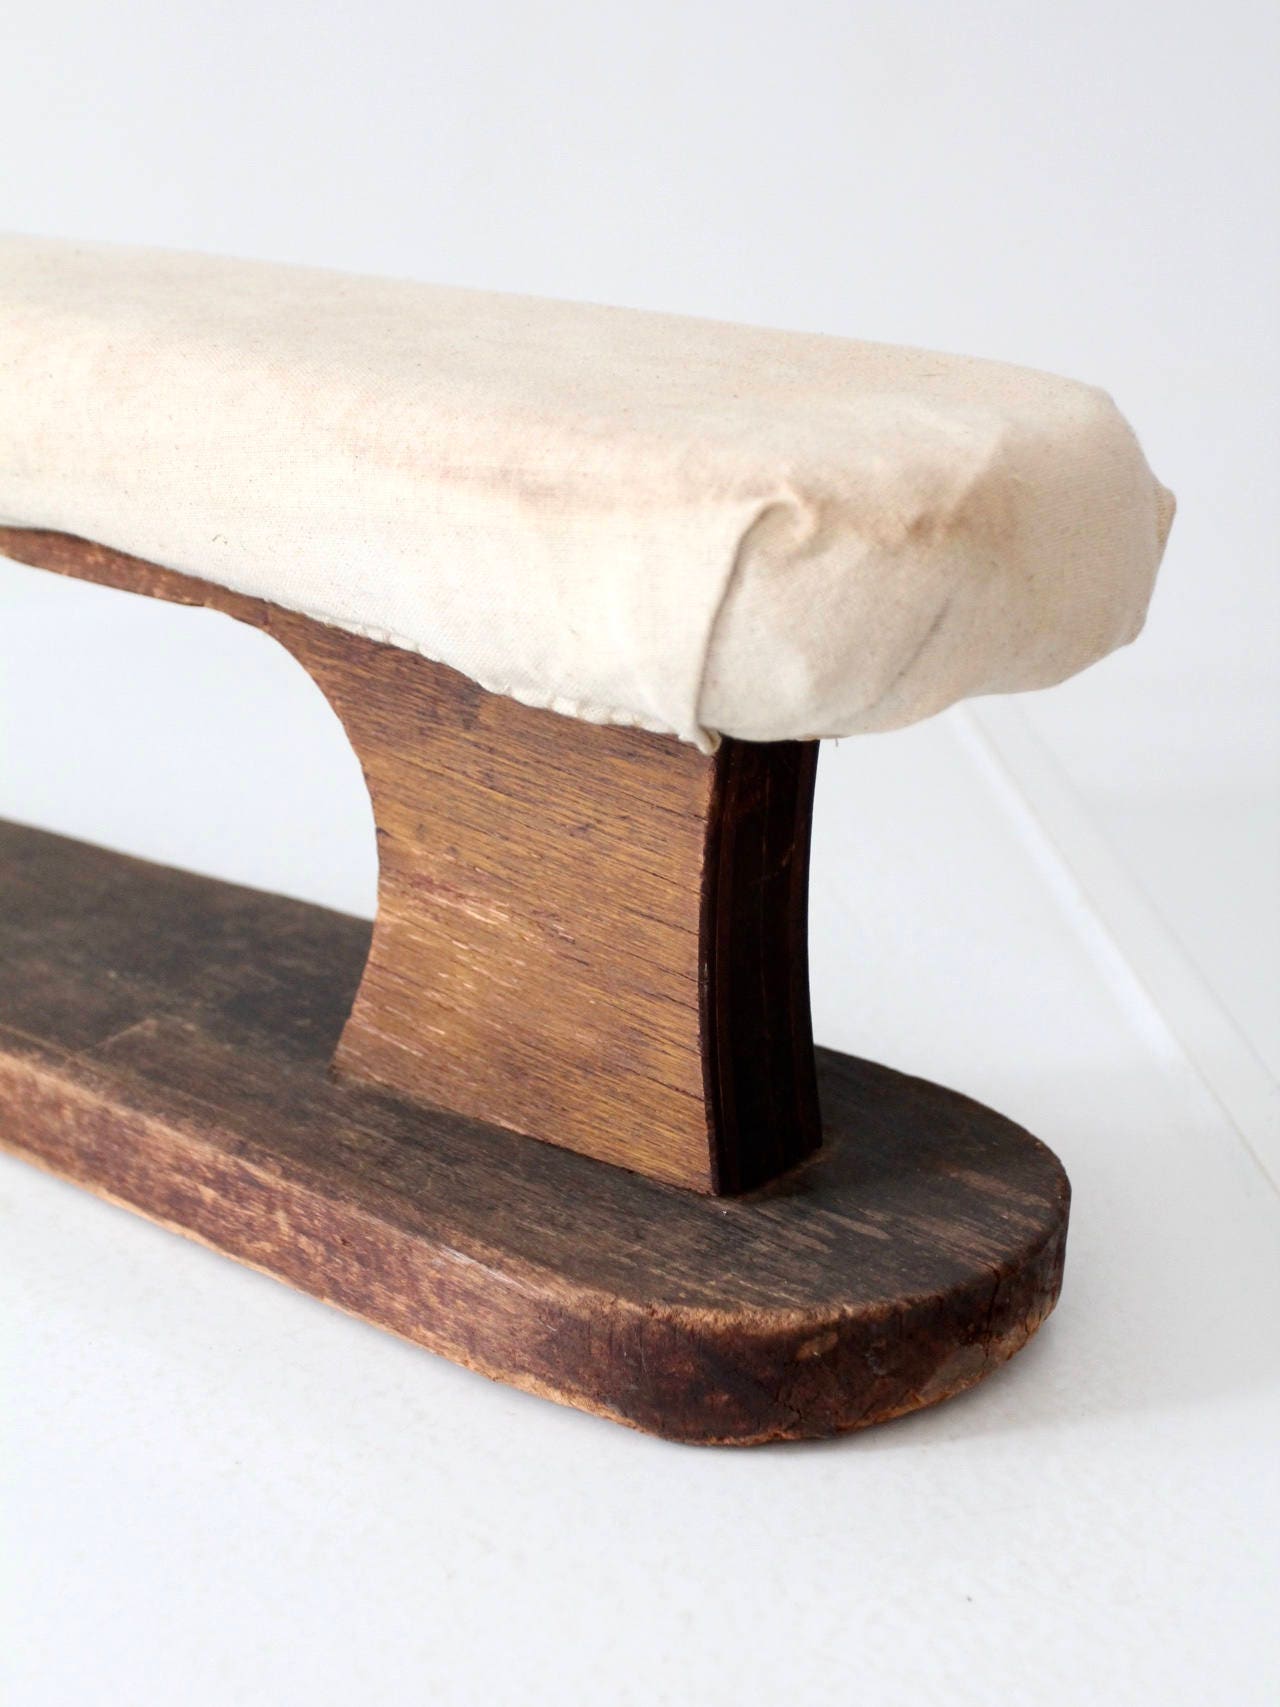 Vintage Wooden Sleeve Ironing Board - household items - by owner -  housewares sale - craigslist